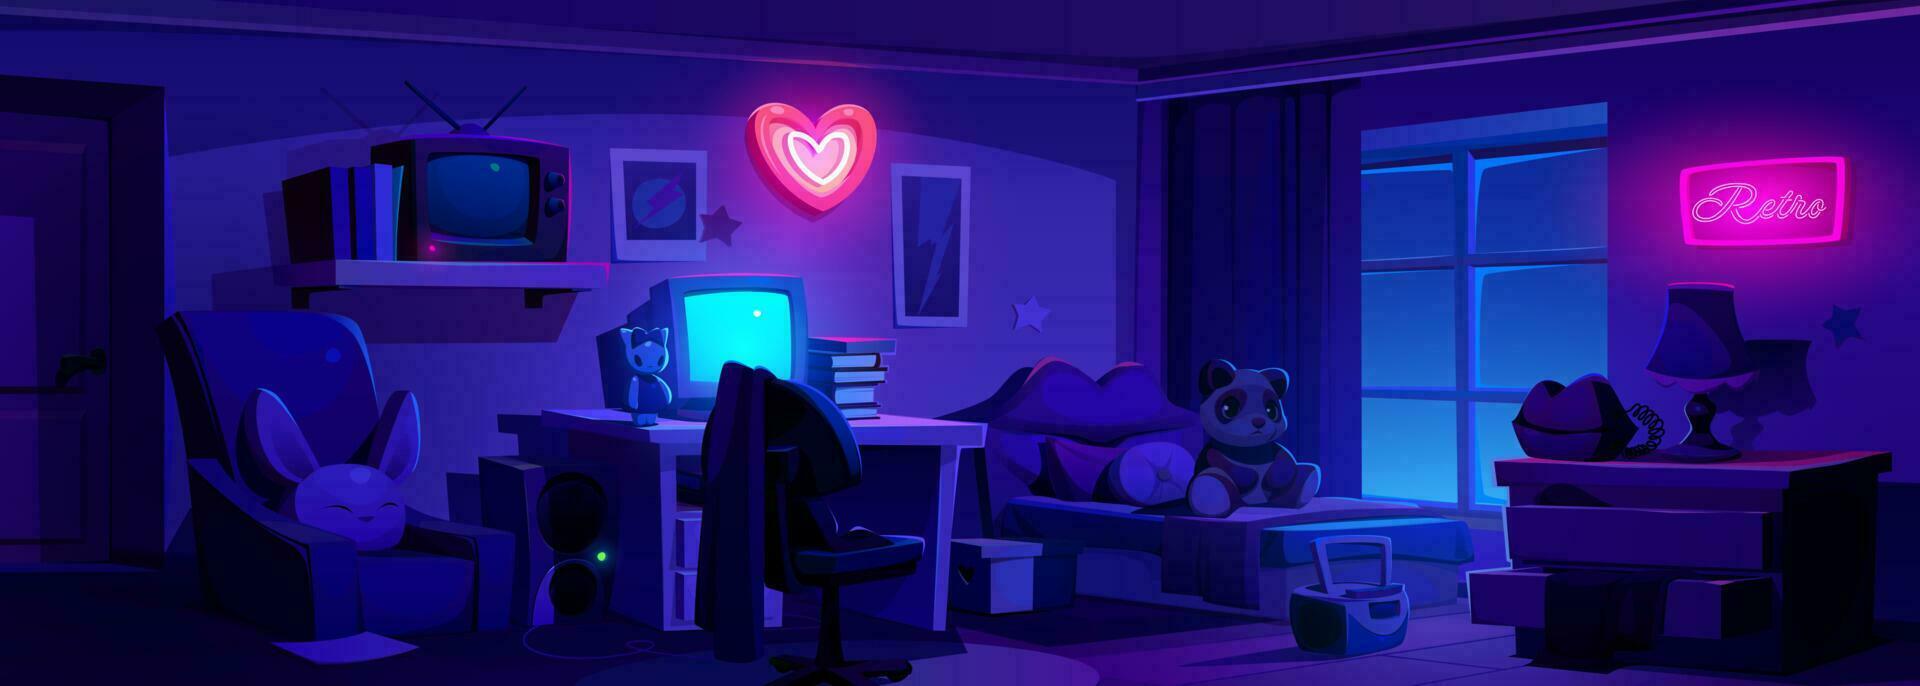 Night y2k girl bedroom interior with neon heart vector